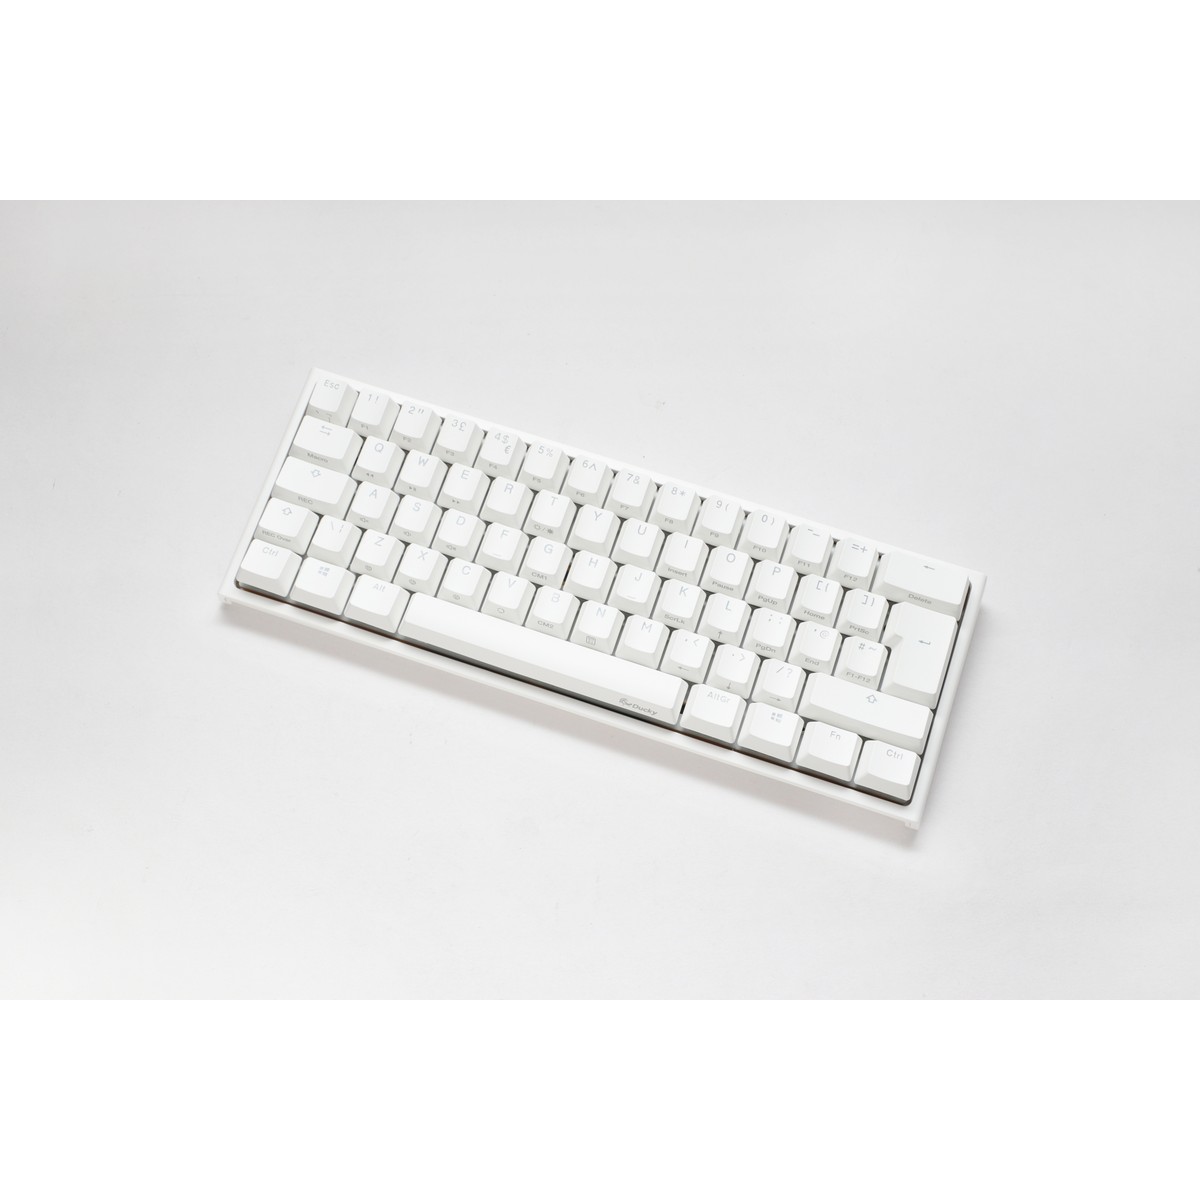 Ducky - Ducky One 2 Pro Mini 60% Mechanical Gaming Keyboard MX Cherry Blue Switch White Frame - UK Layout